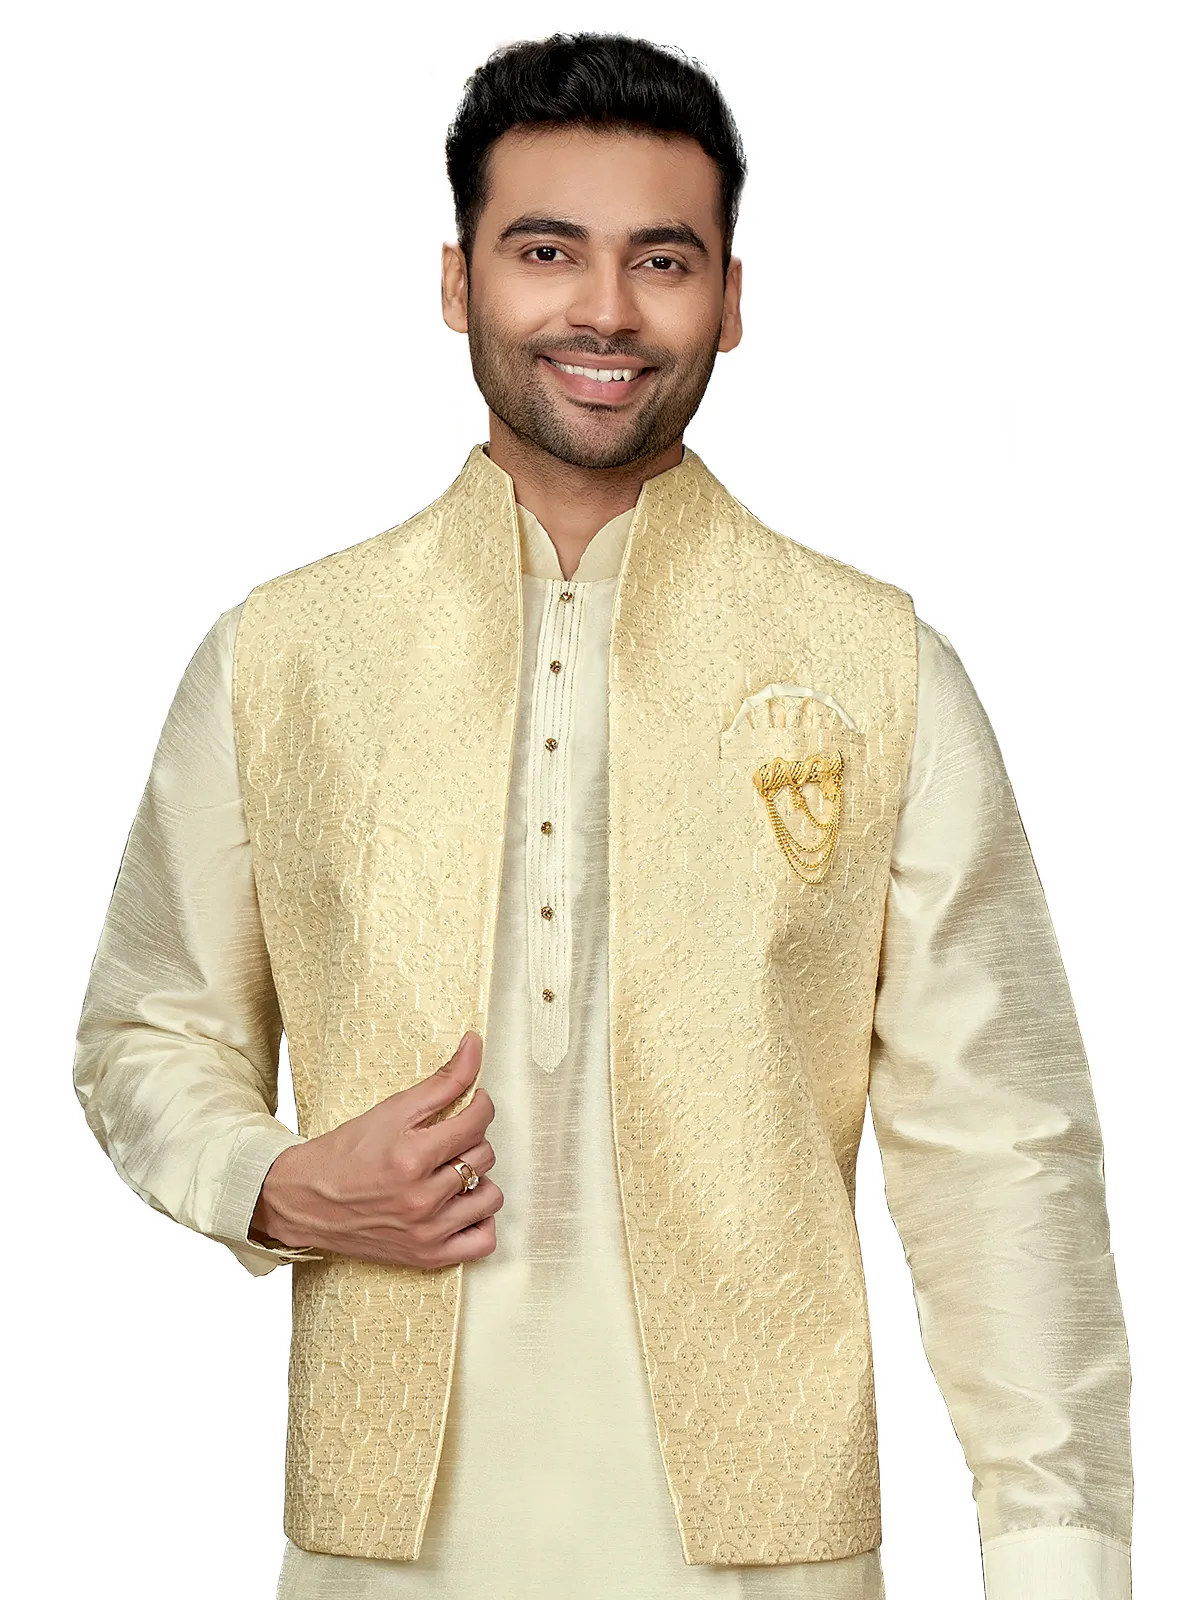 Silk waistcoat set in cream for wedding